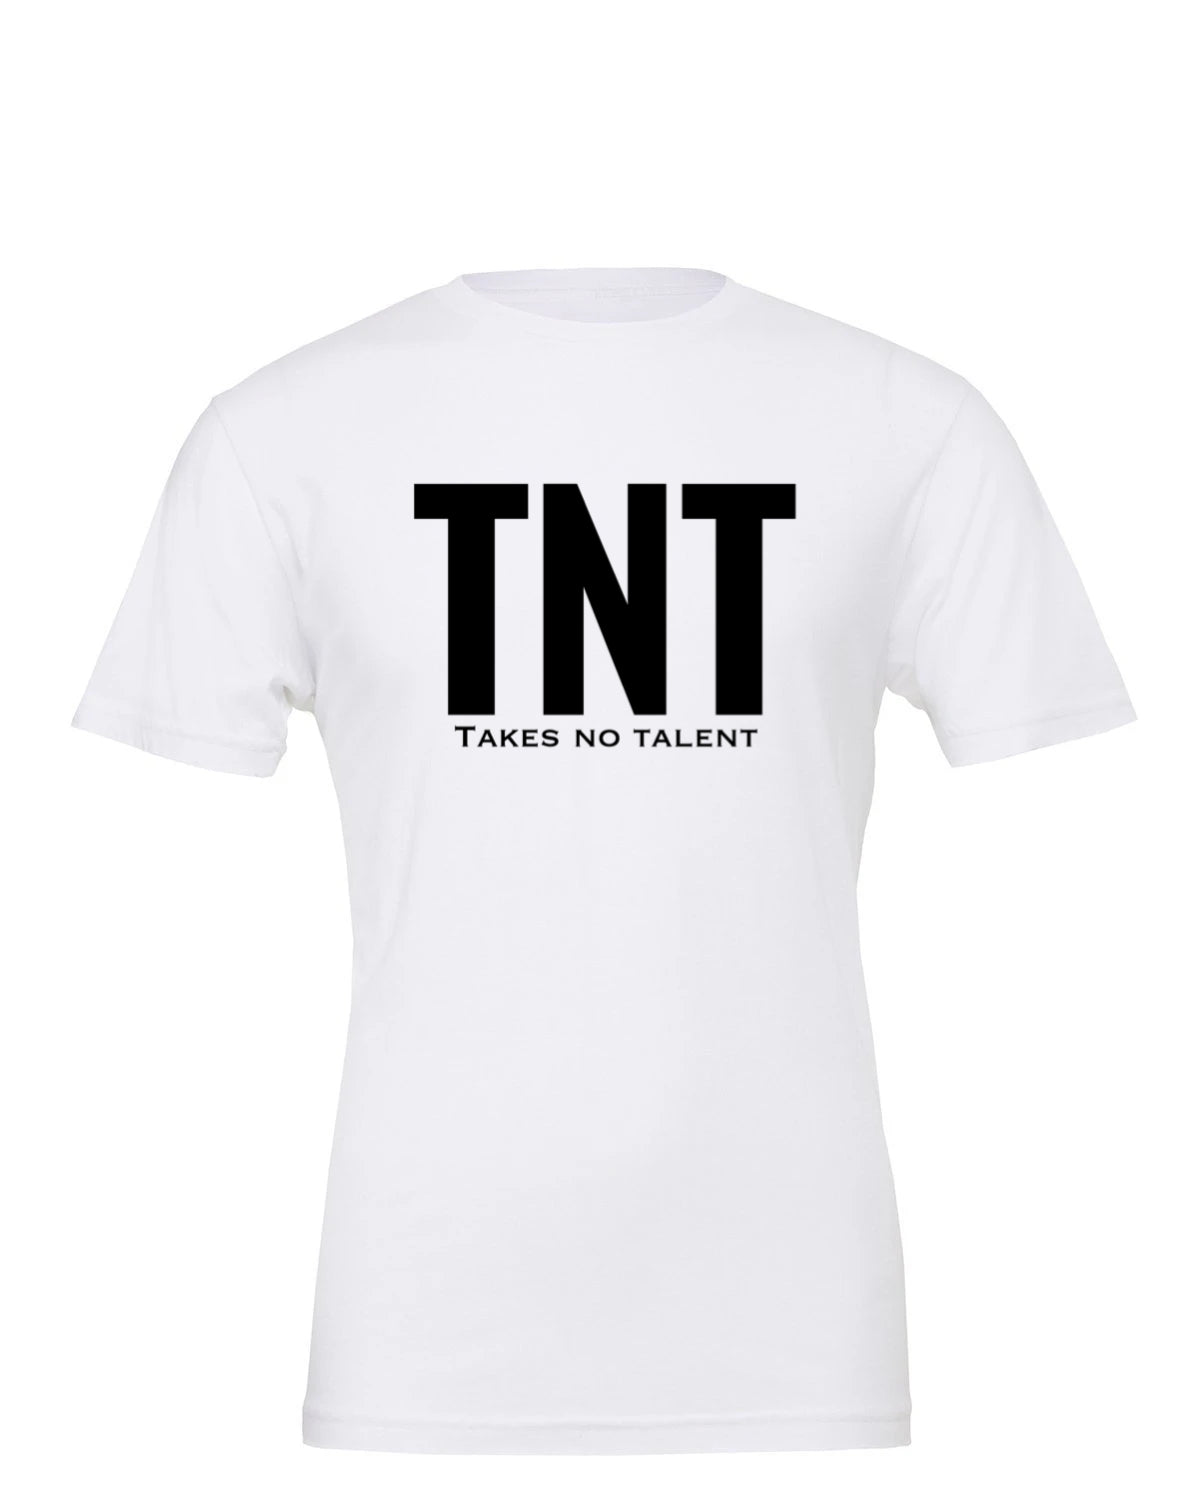 Project 100 “TNT” Unisex Tee